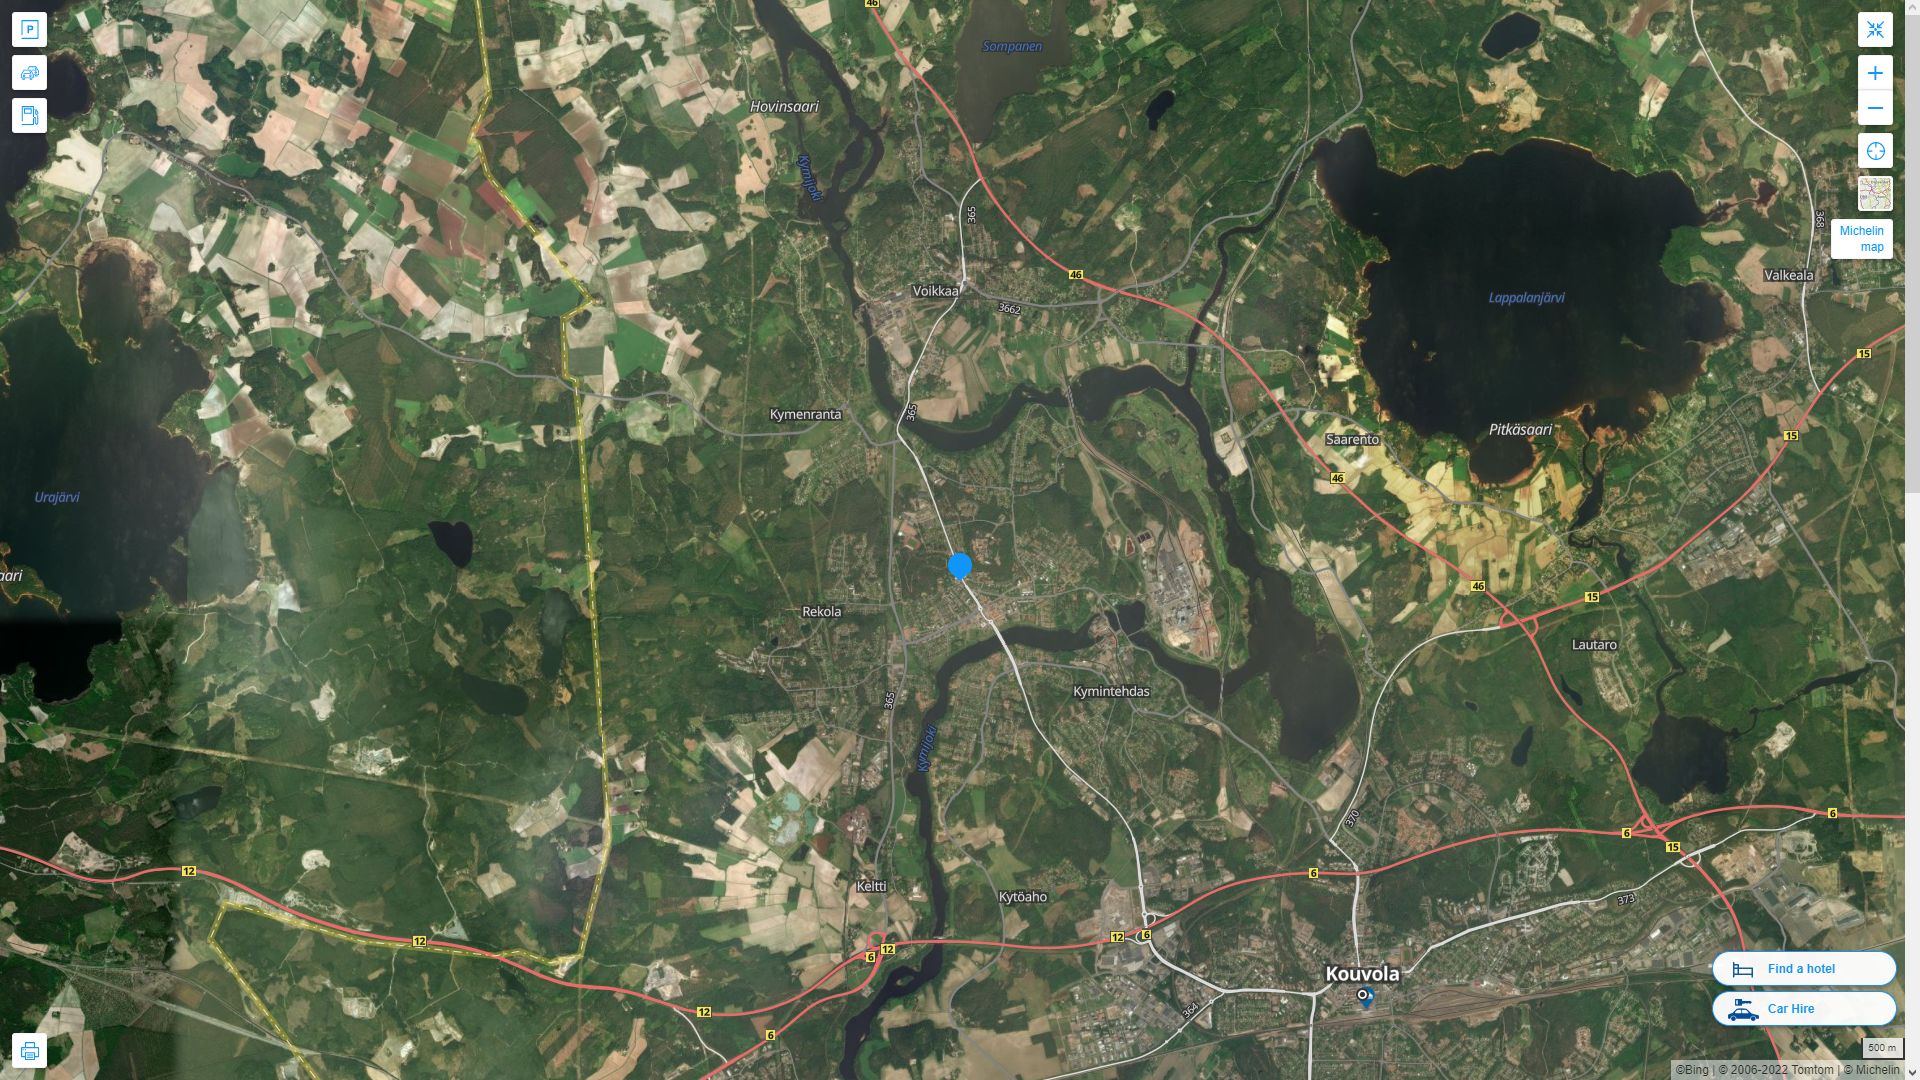 Kuusankoski Highway and Road Map with Satellite View